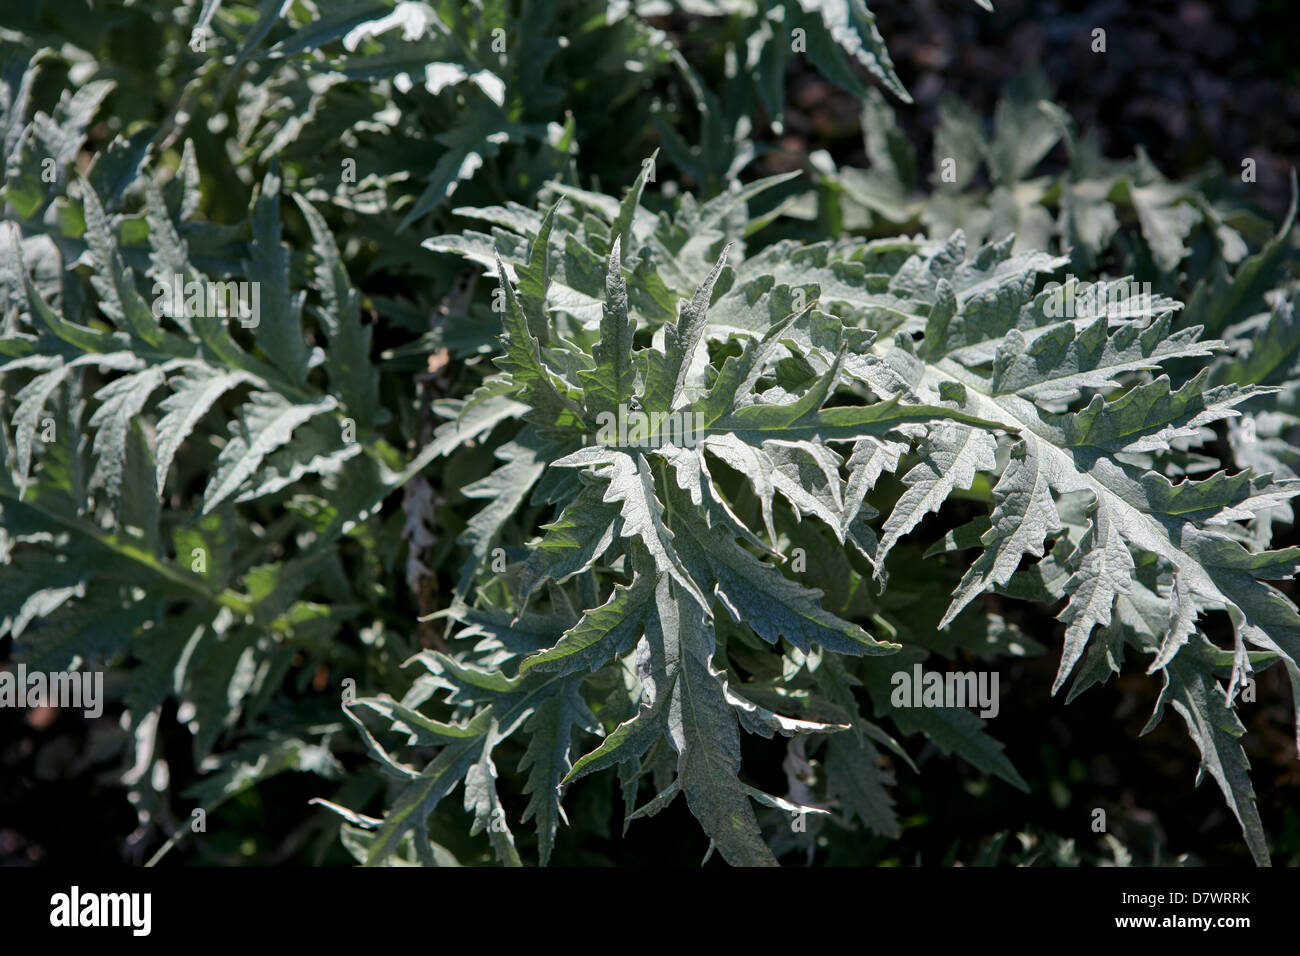 Cynara cardunculus - Globe artichoke leaves - spiky silver foliage Stock Photo